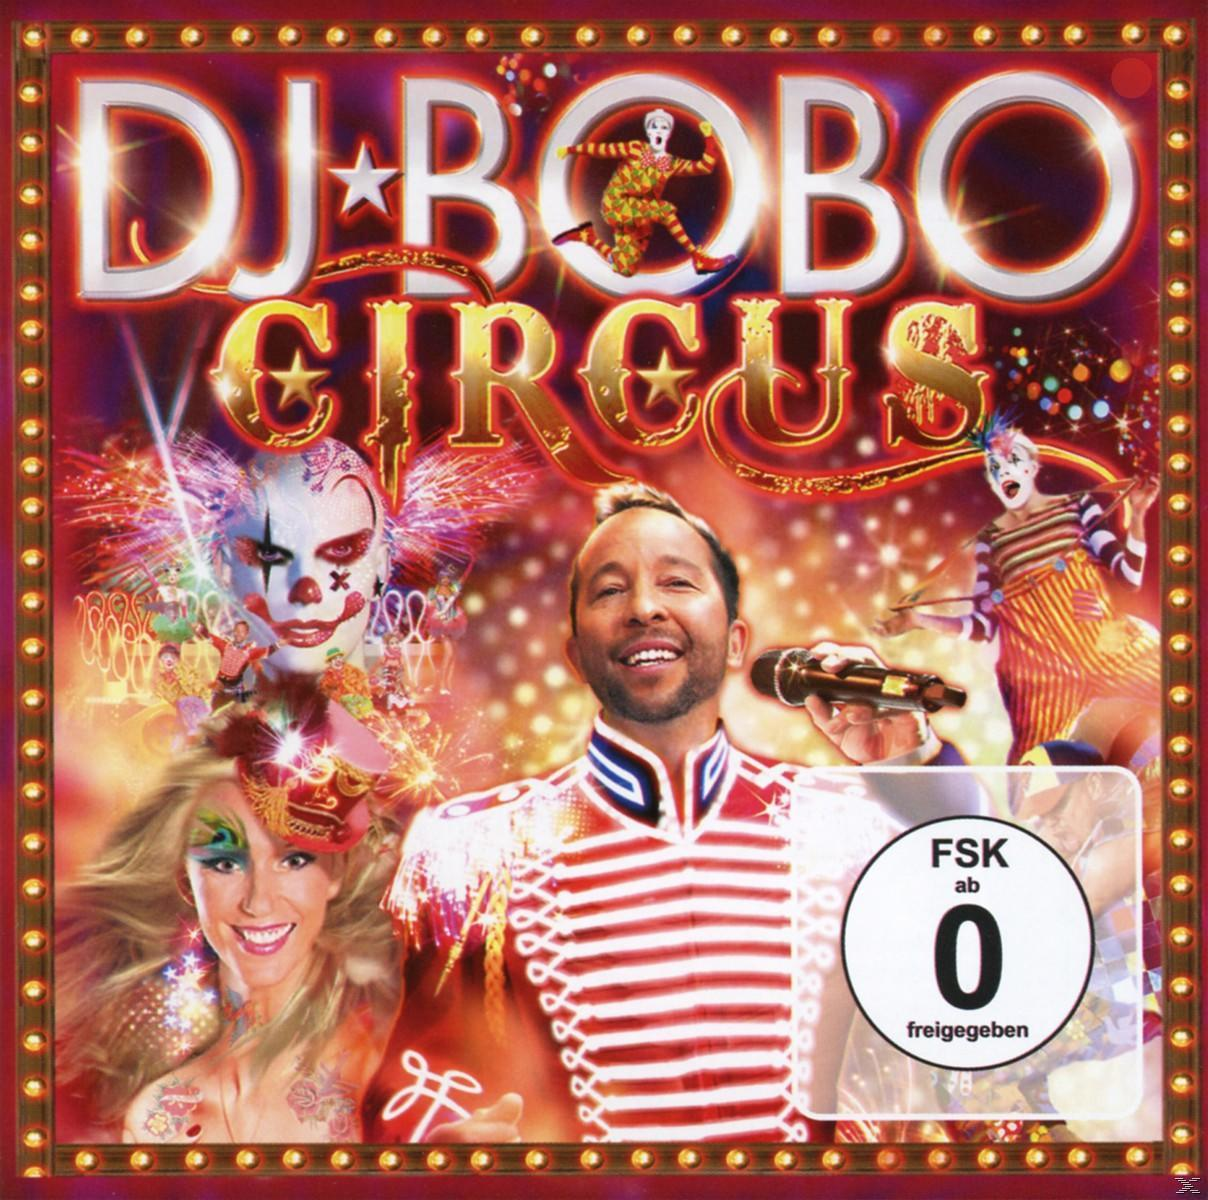 DJ Bobo - Circus DVD (CD + - Video)